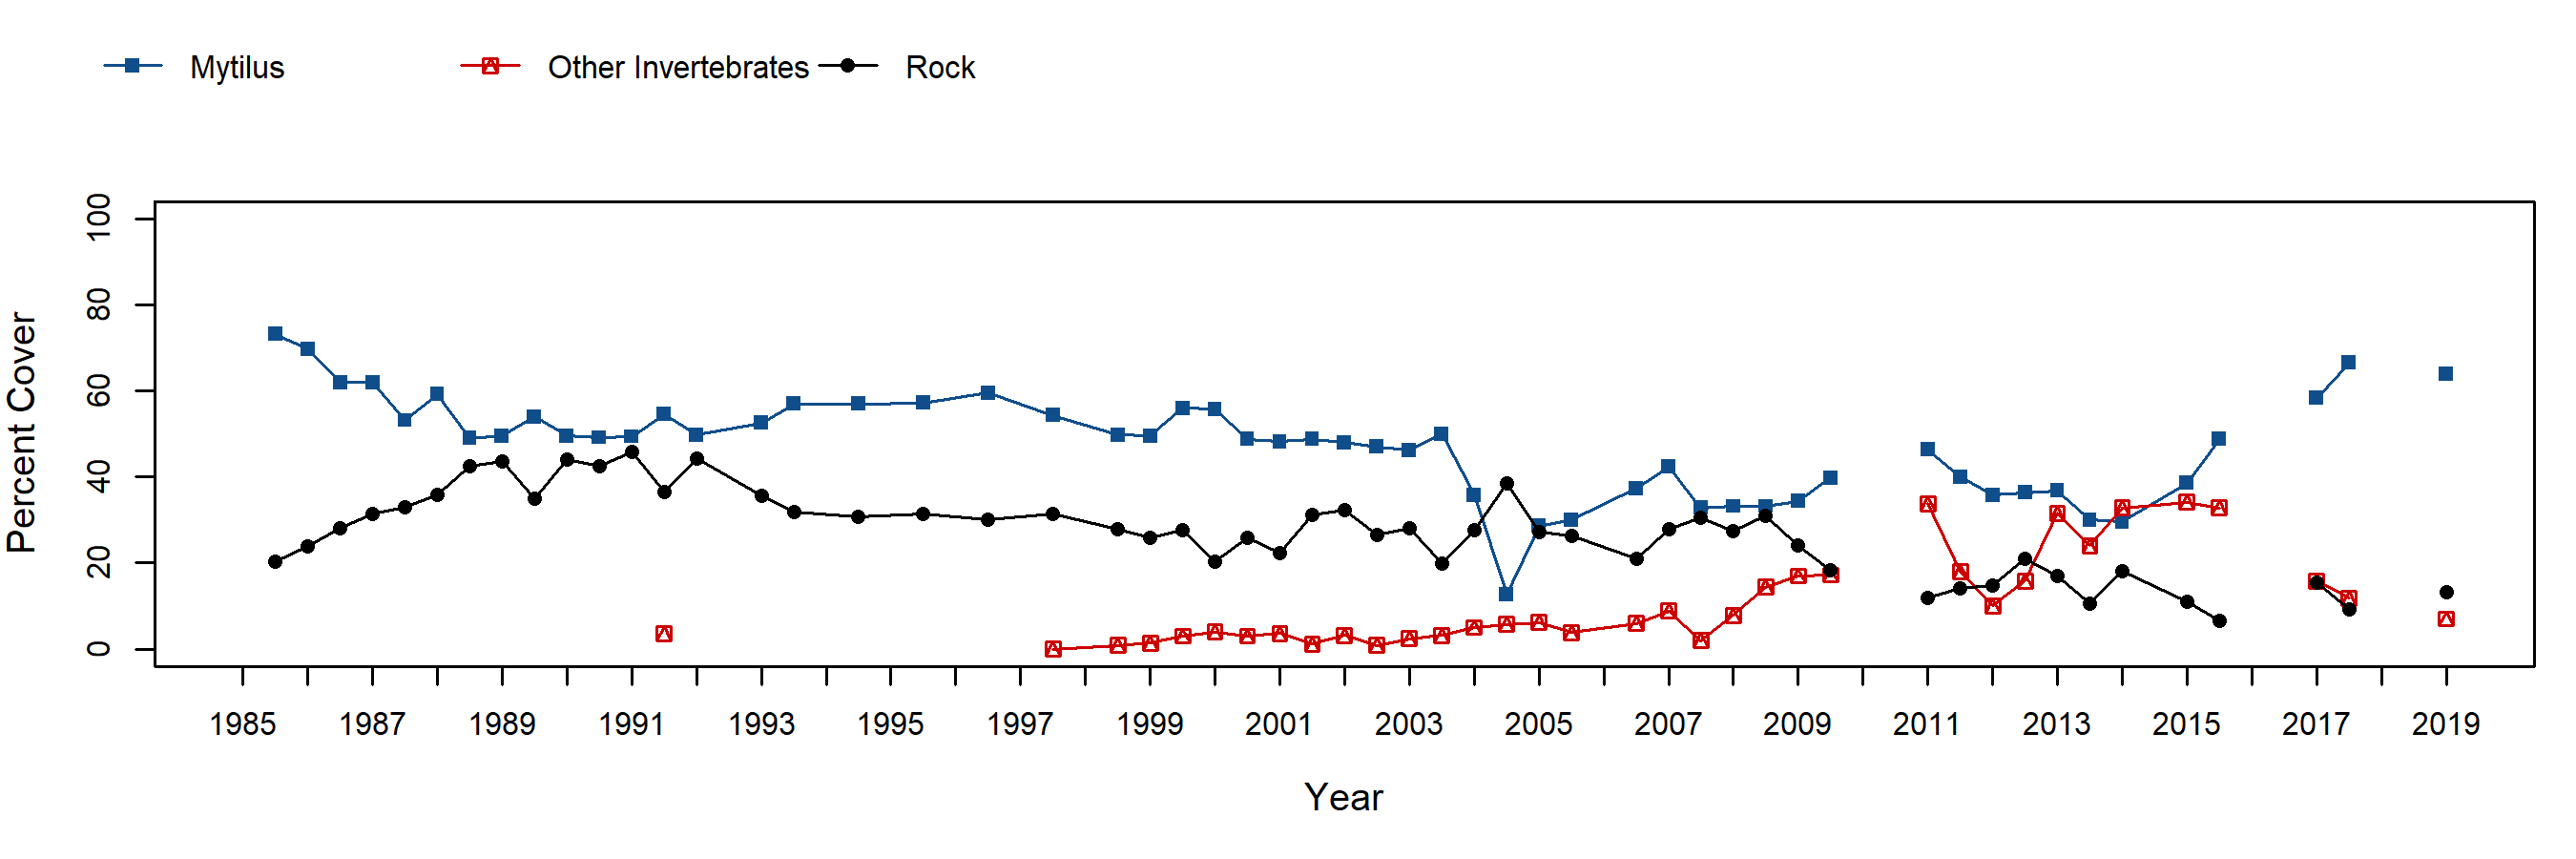 Ford Point Mytilus trend plot